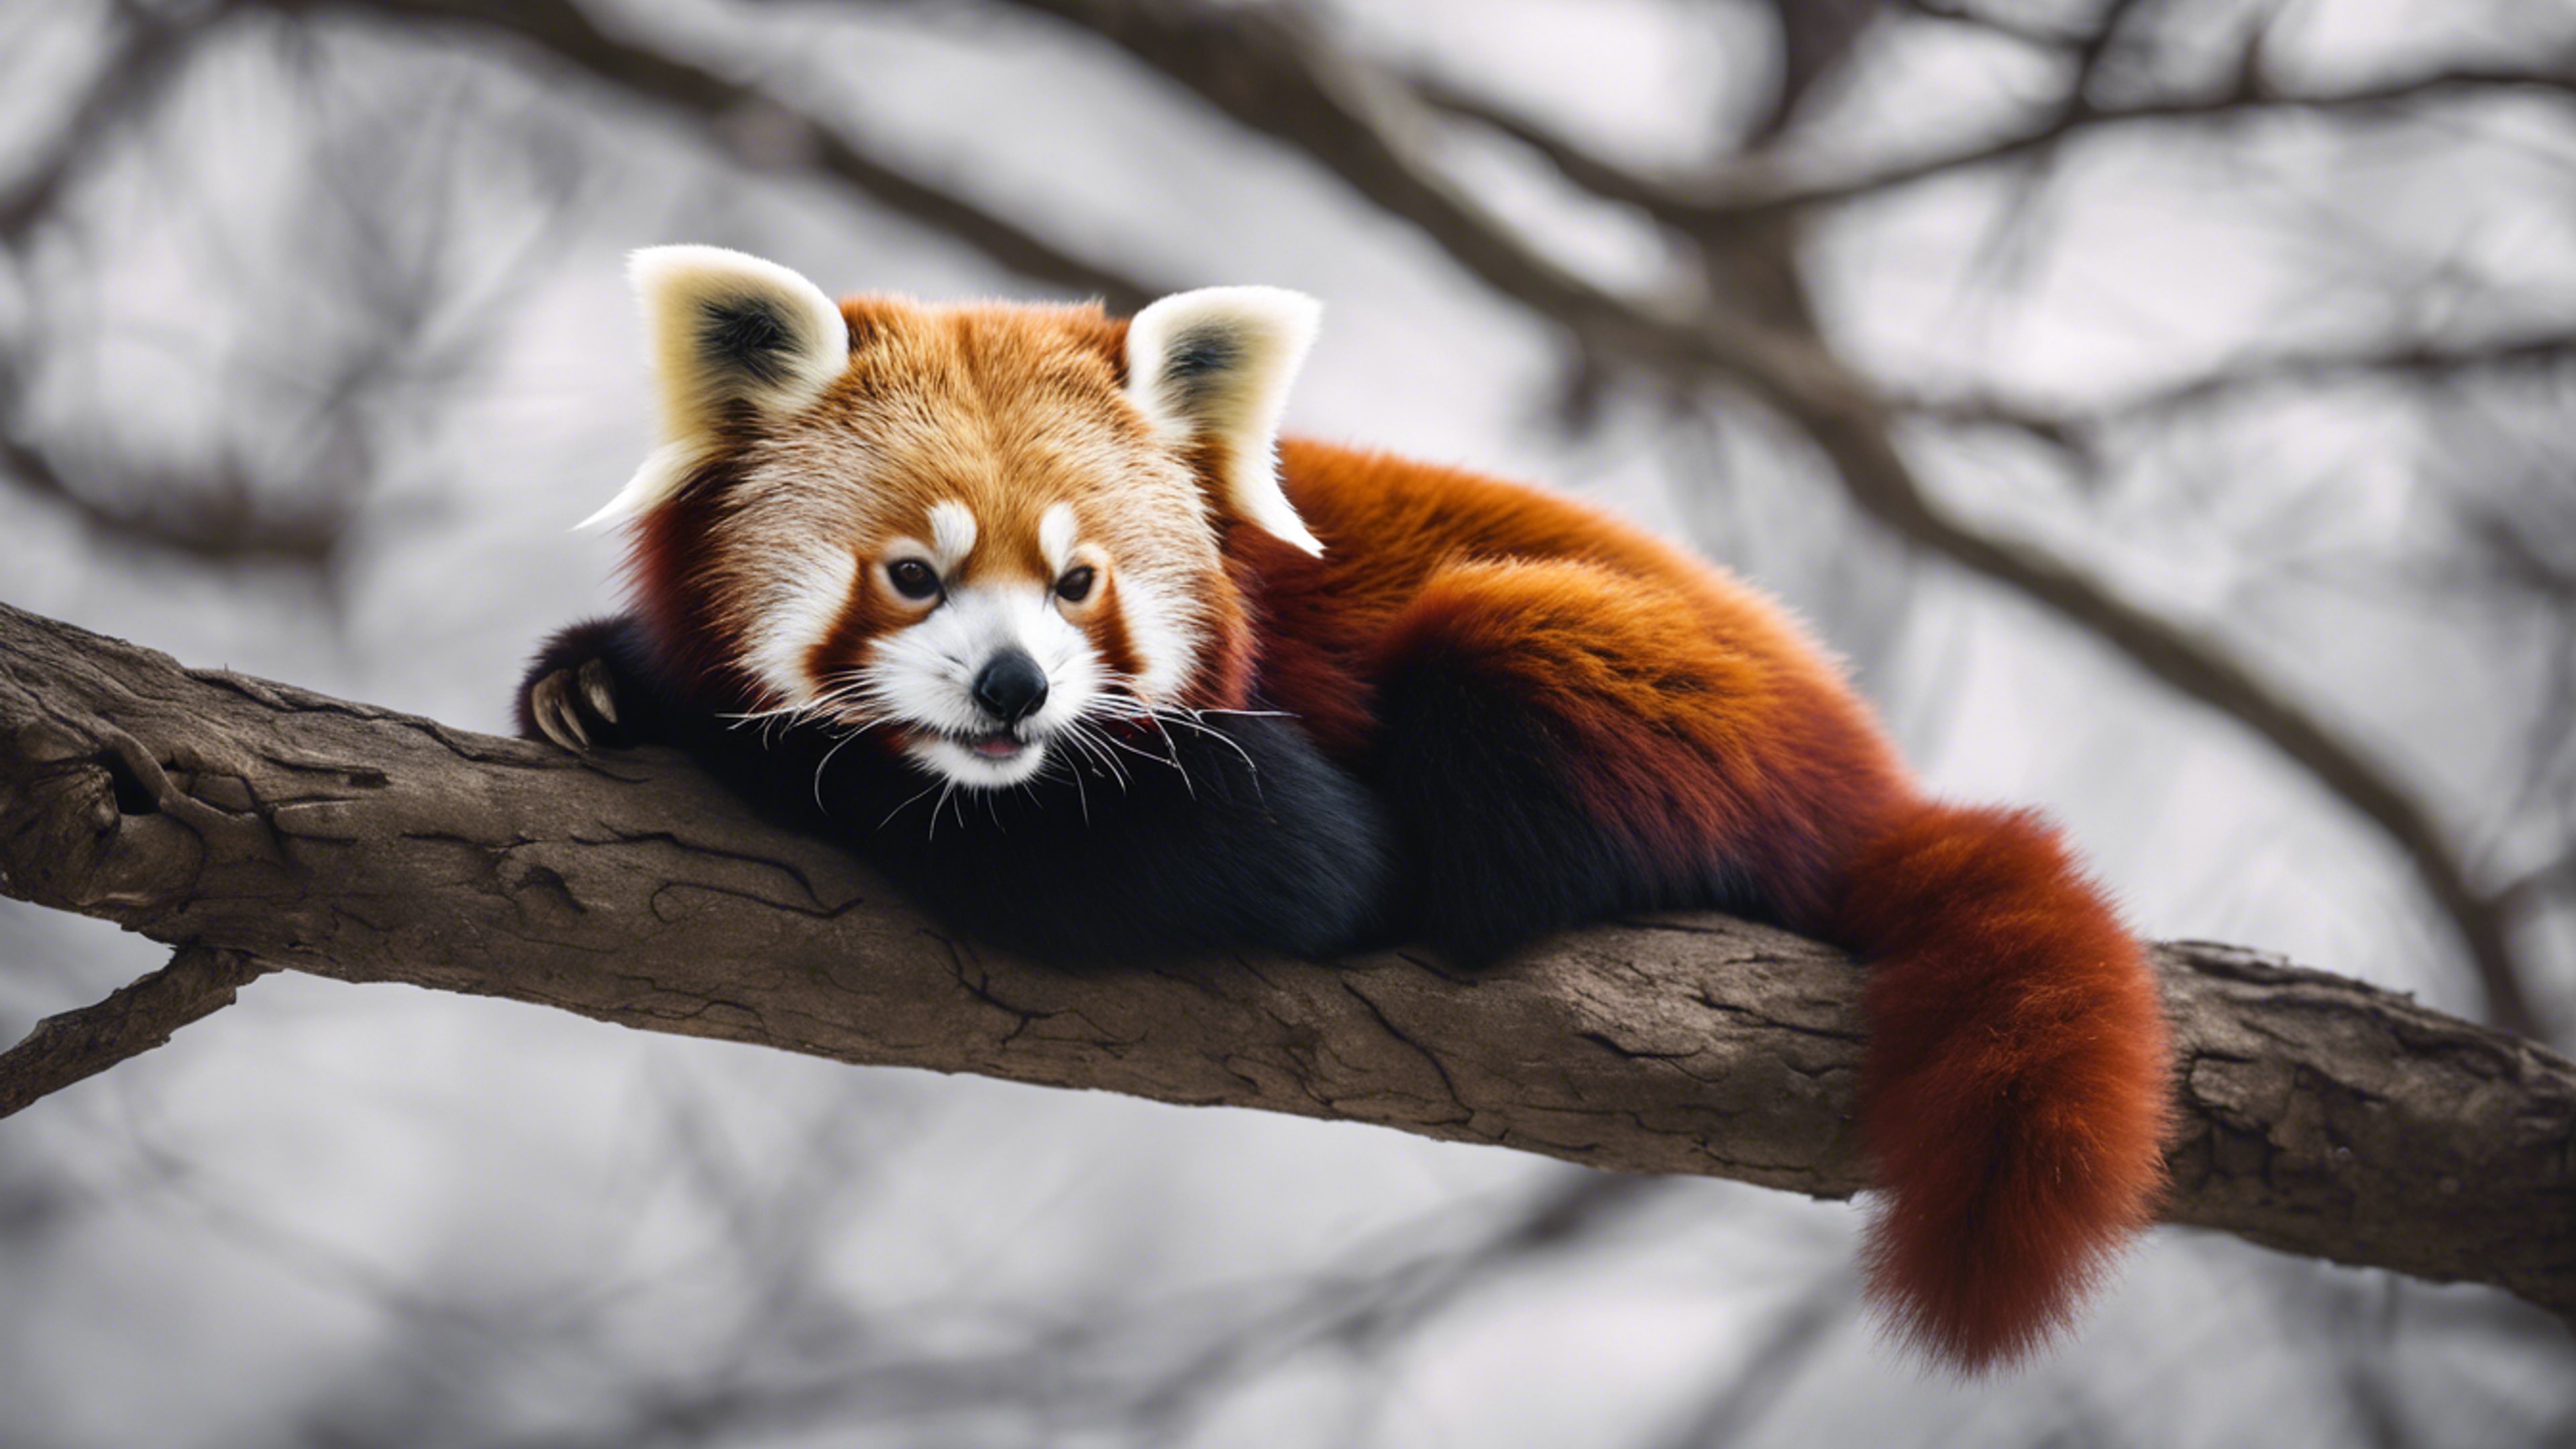 A red panda enjoying a peaceful nap on a thick tree branch. 墙纸[0844f7d1c6274207ac91]